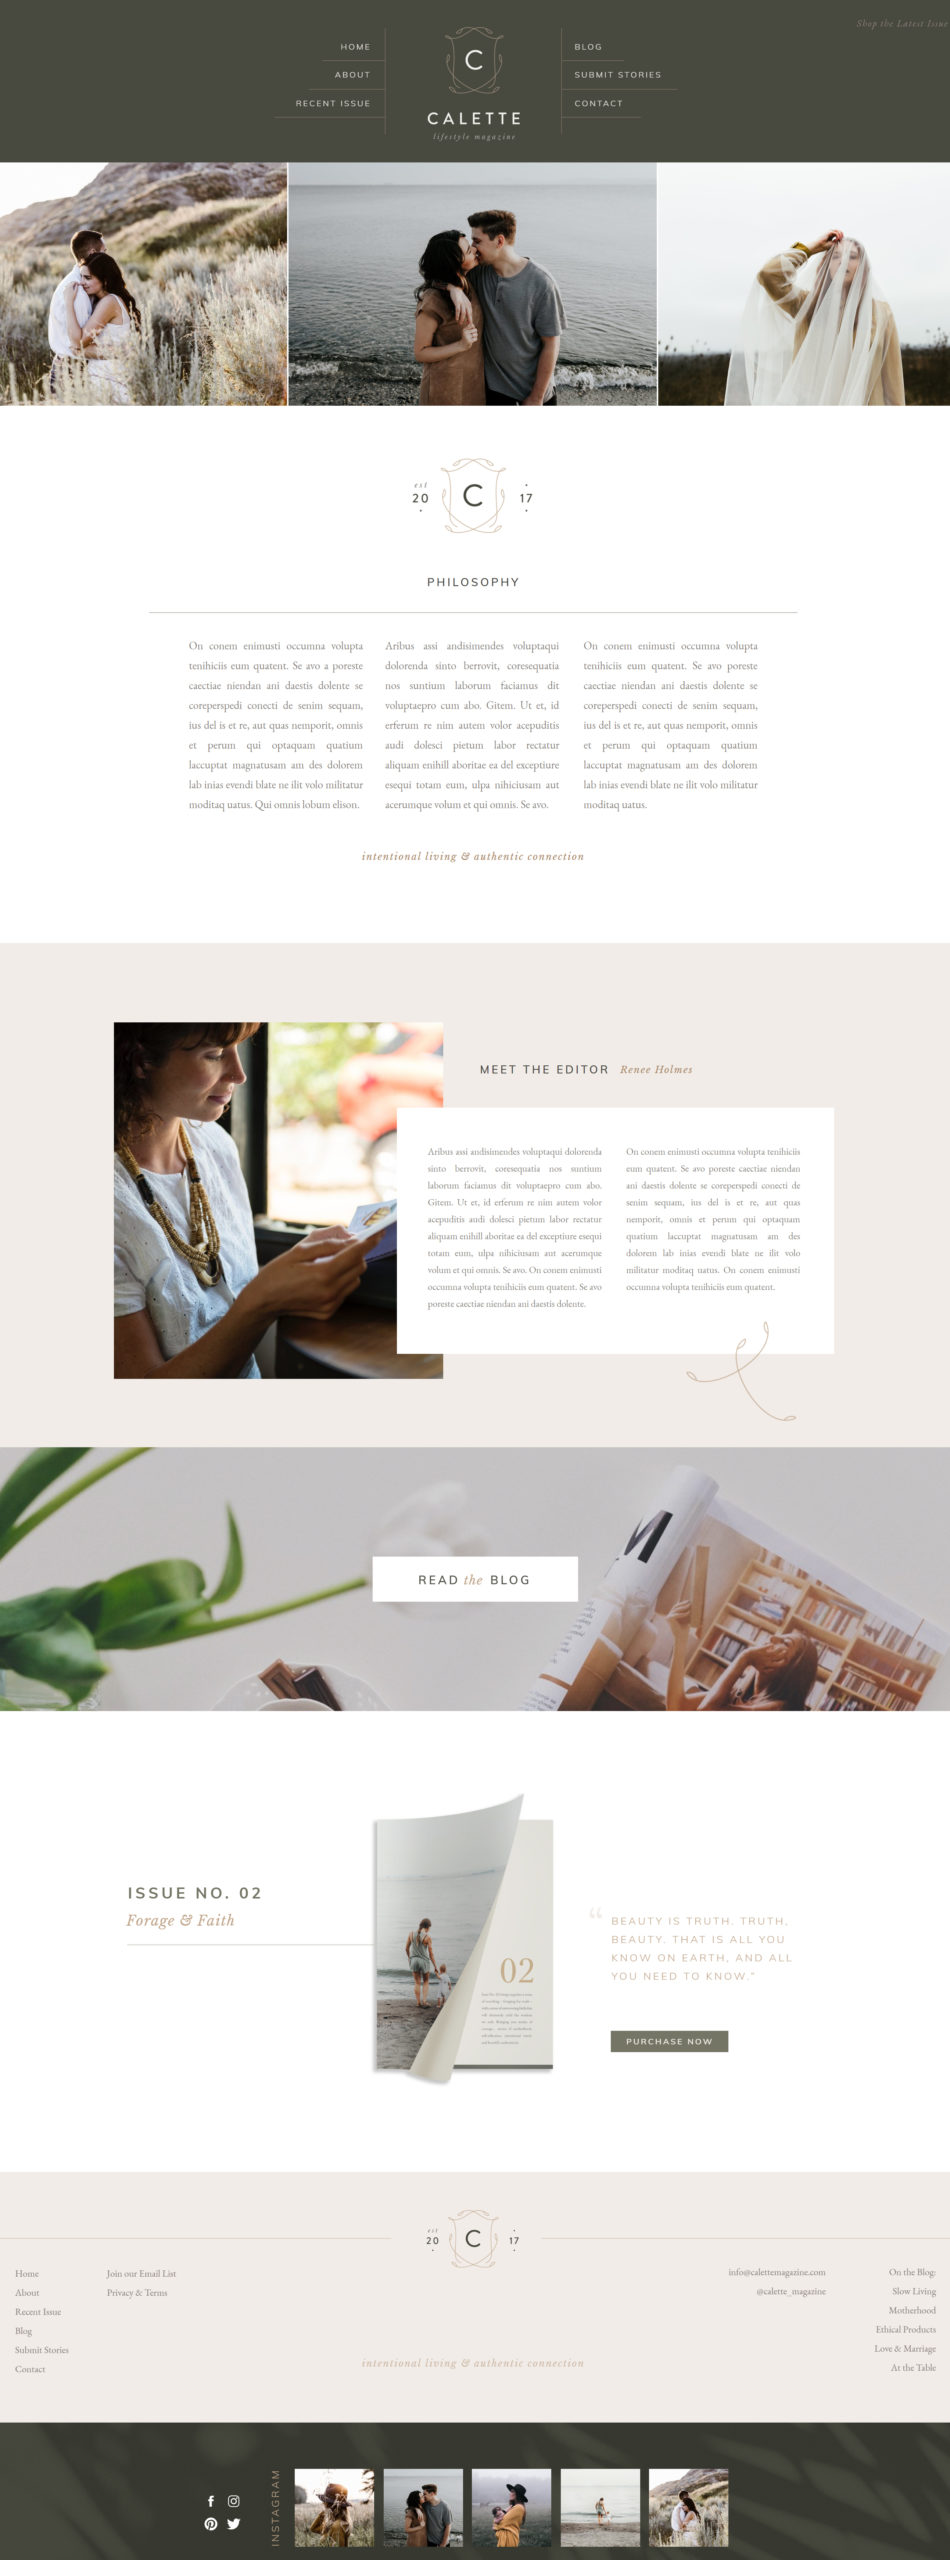 Sarah Ann Design - Website Design for Creatives - Magazine Website - Calette Magazine